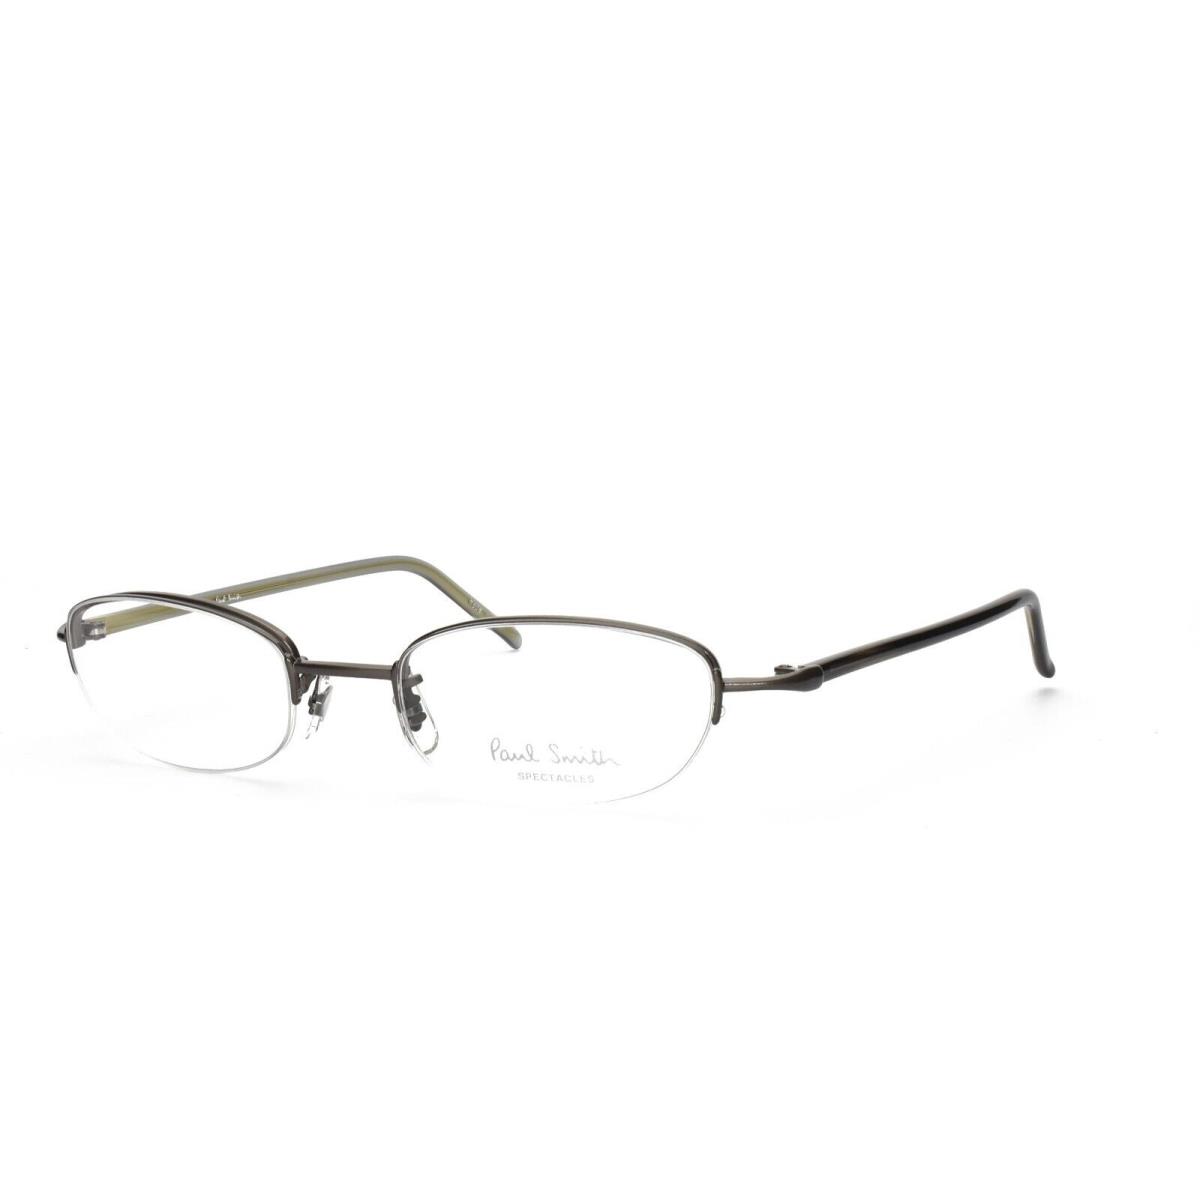 Paul Smith 131 FB 48-19-135 Pewter Gray Vtg Vintage Eyeglasses Frames